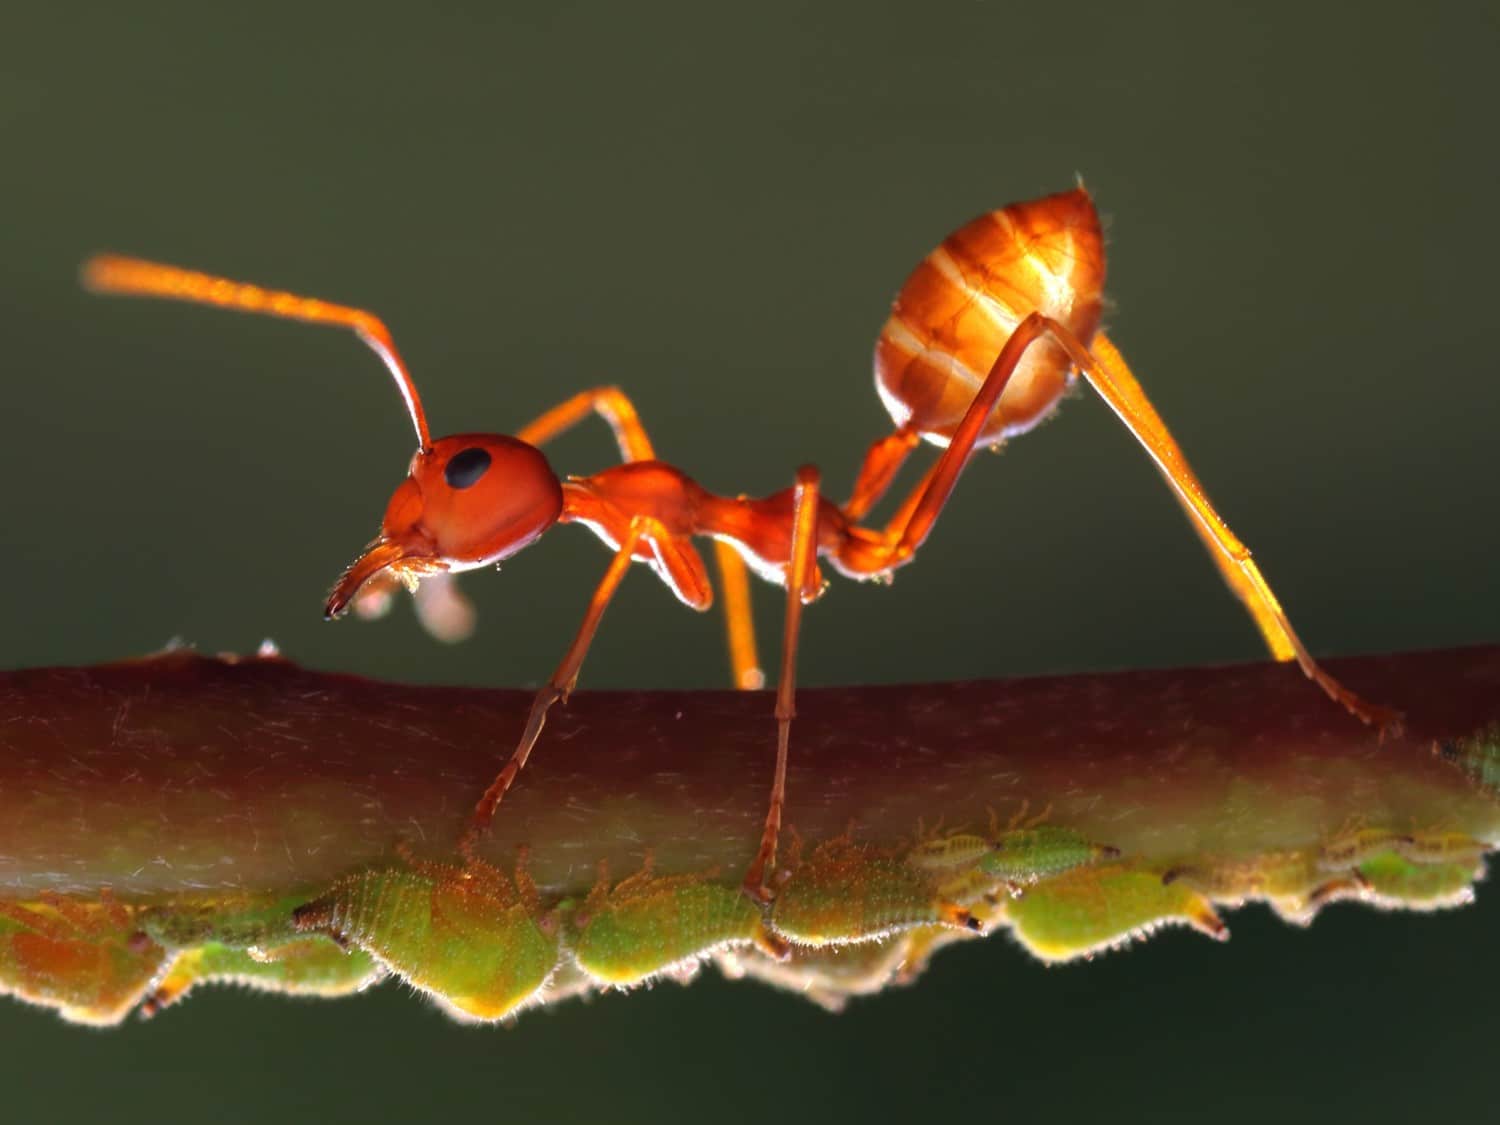 Ants, useful in the garden